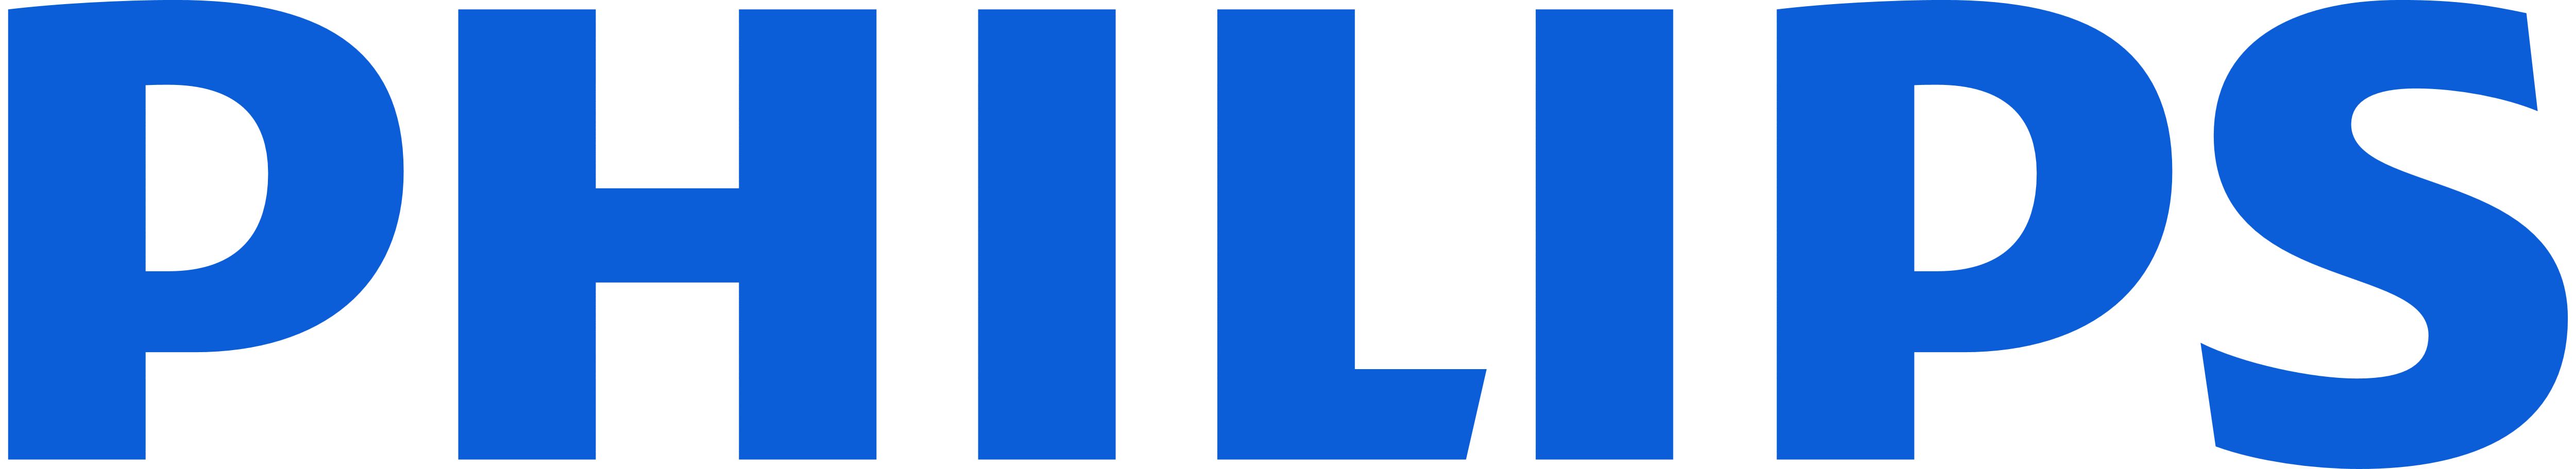 Home - Philips-logo - Logo De